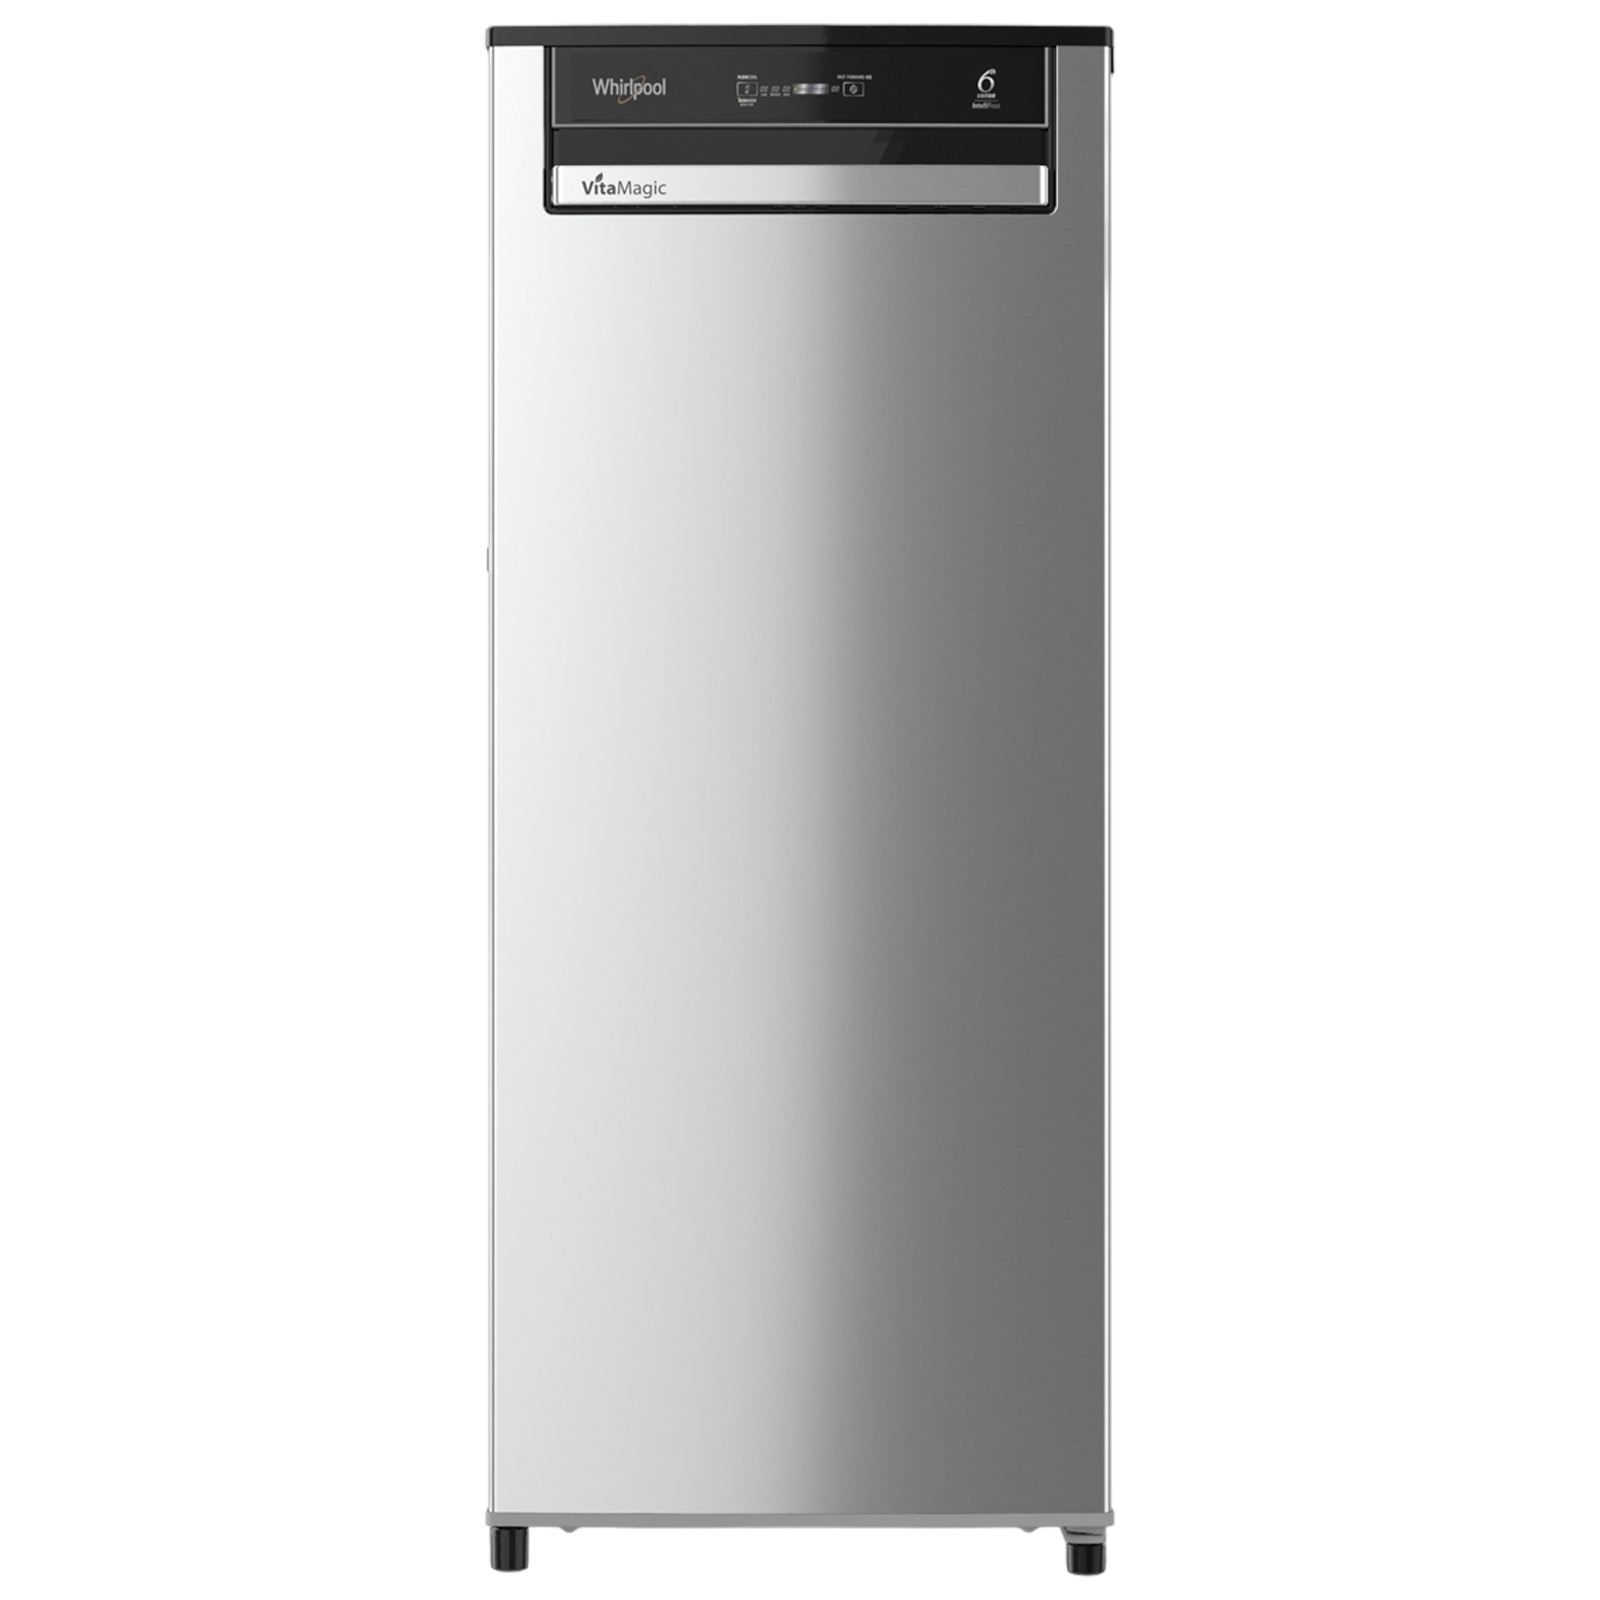 

Whirlpool VMPRO 192 Litres 3 Star Direct Cool Single Door Refrigerator with Zeolite Technology (73131, Grey)